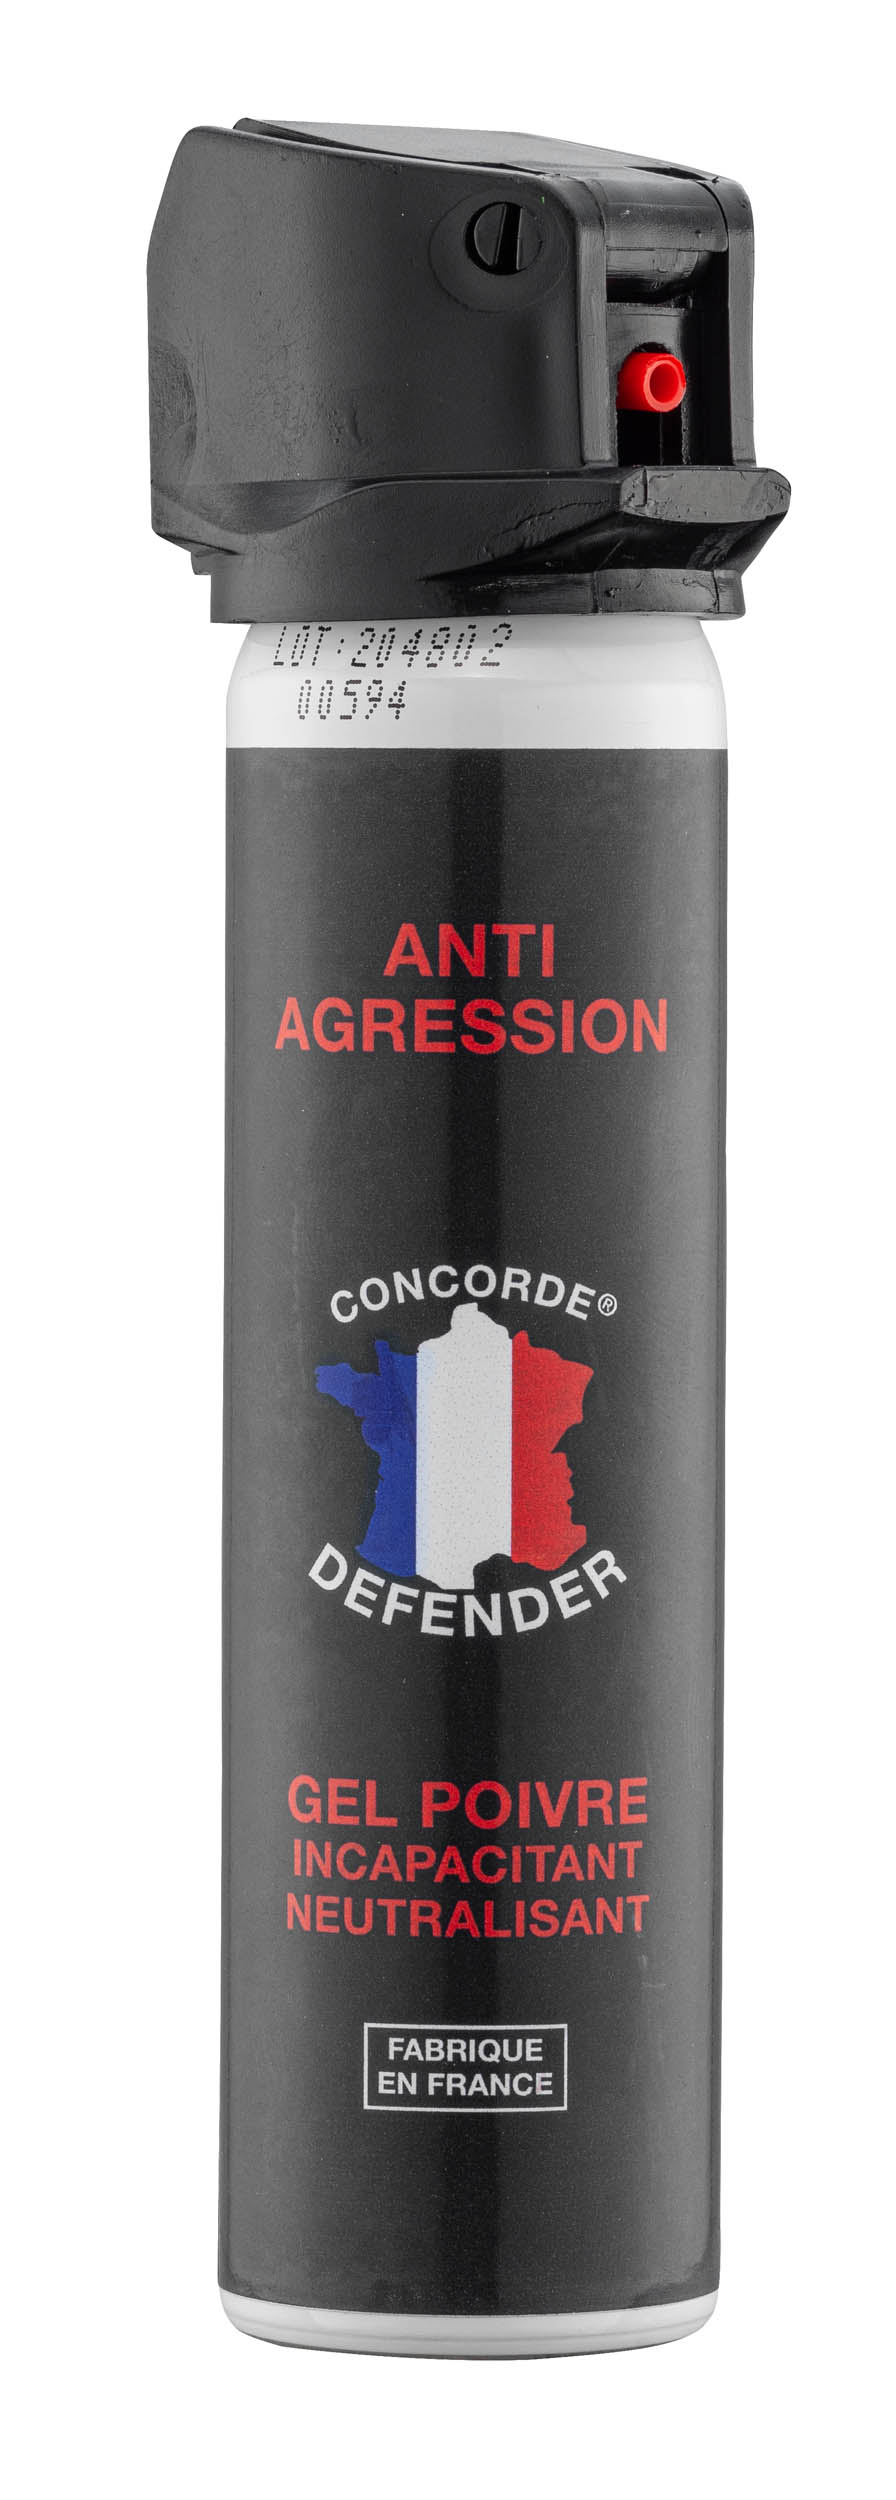 TW102 - Bombe Anti-Agression 15 ml Gaz CS